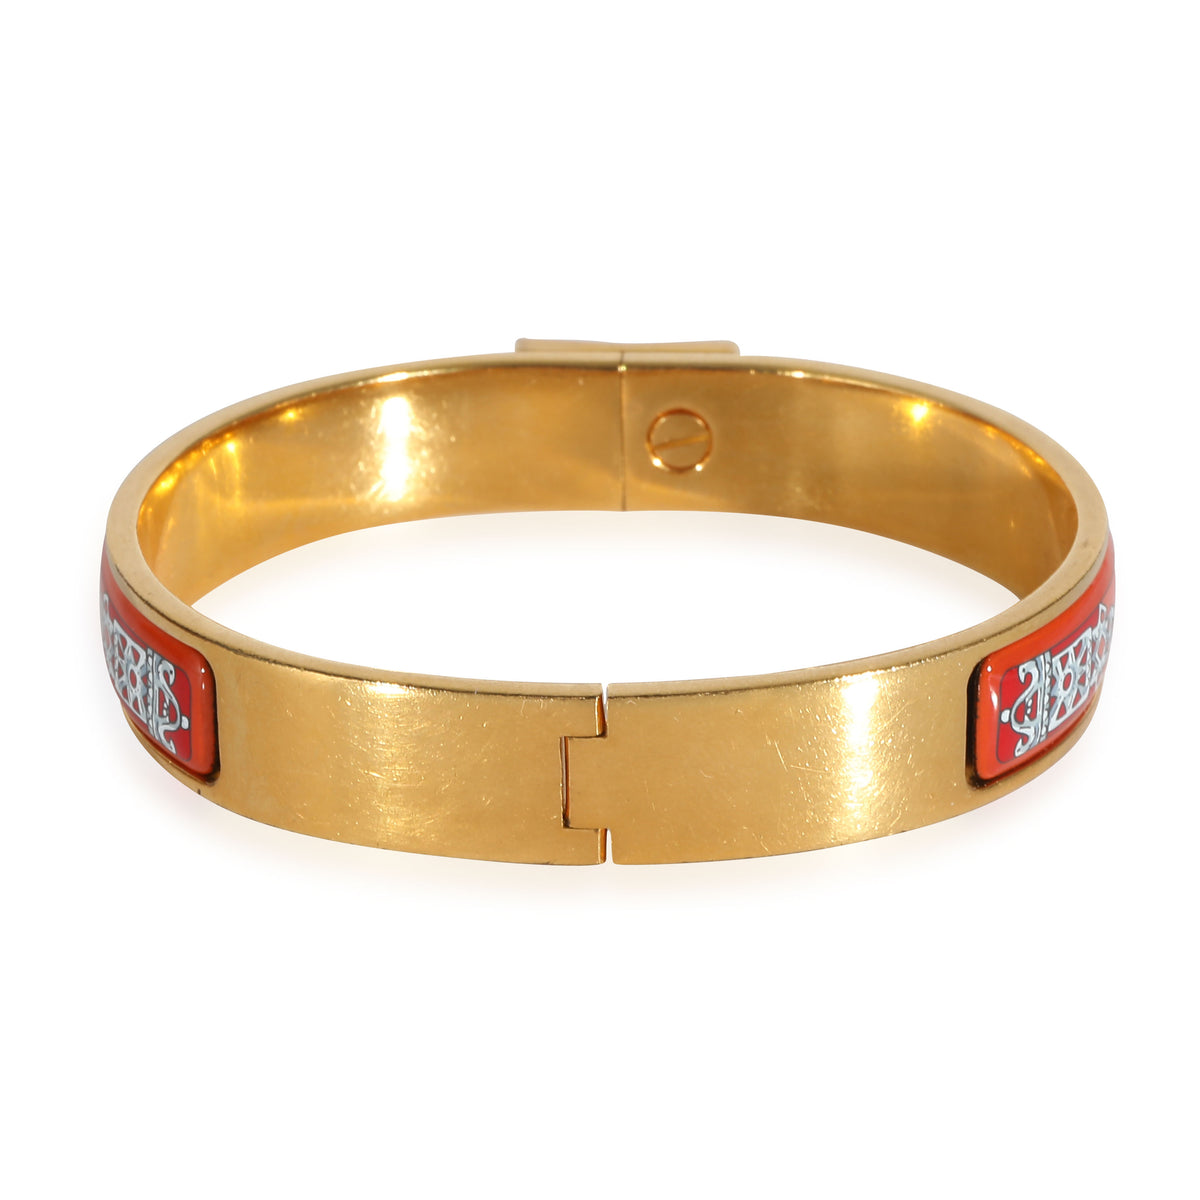 Vintage Red Enamel Gold Loquet Narrow Bracelet